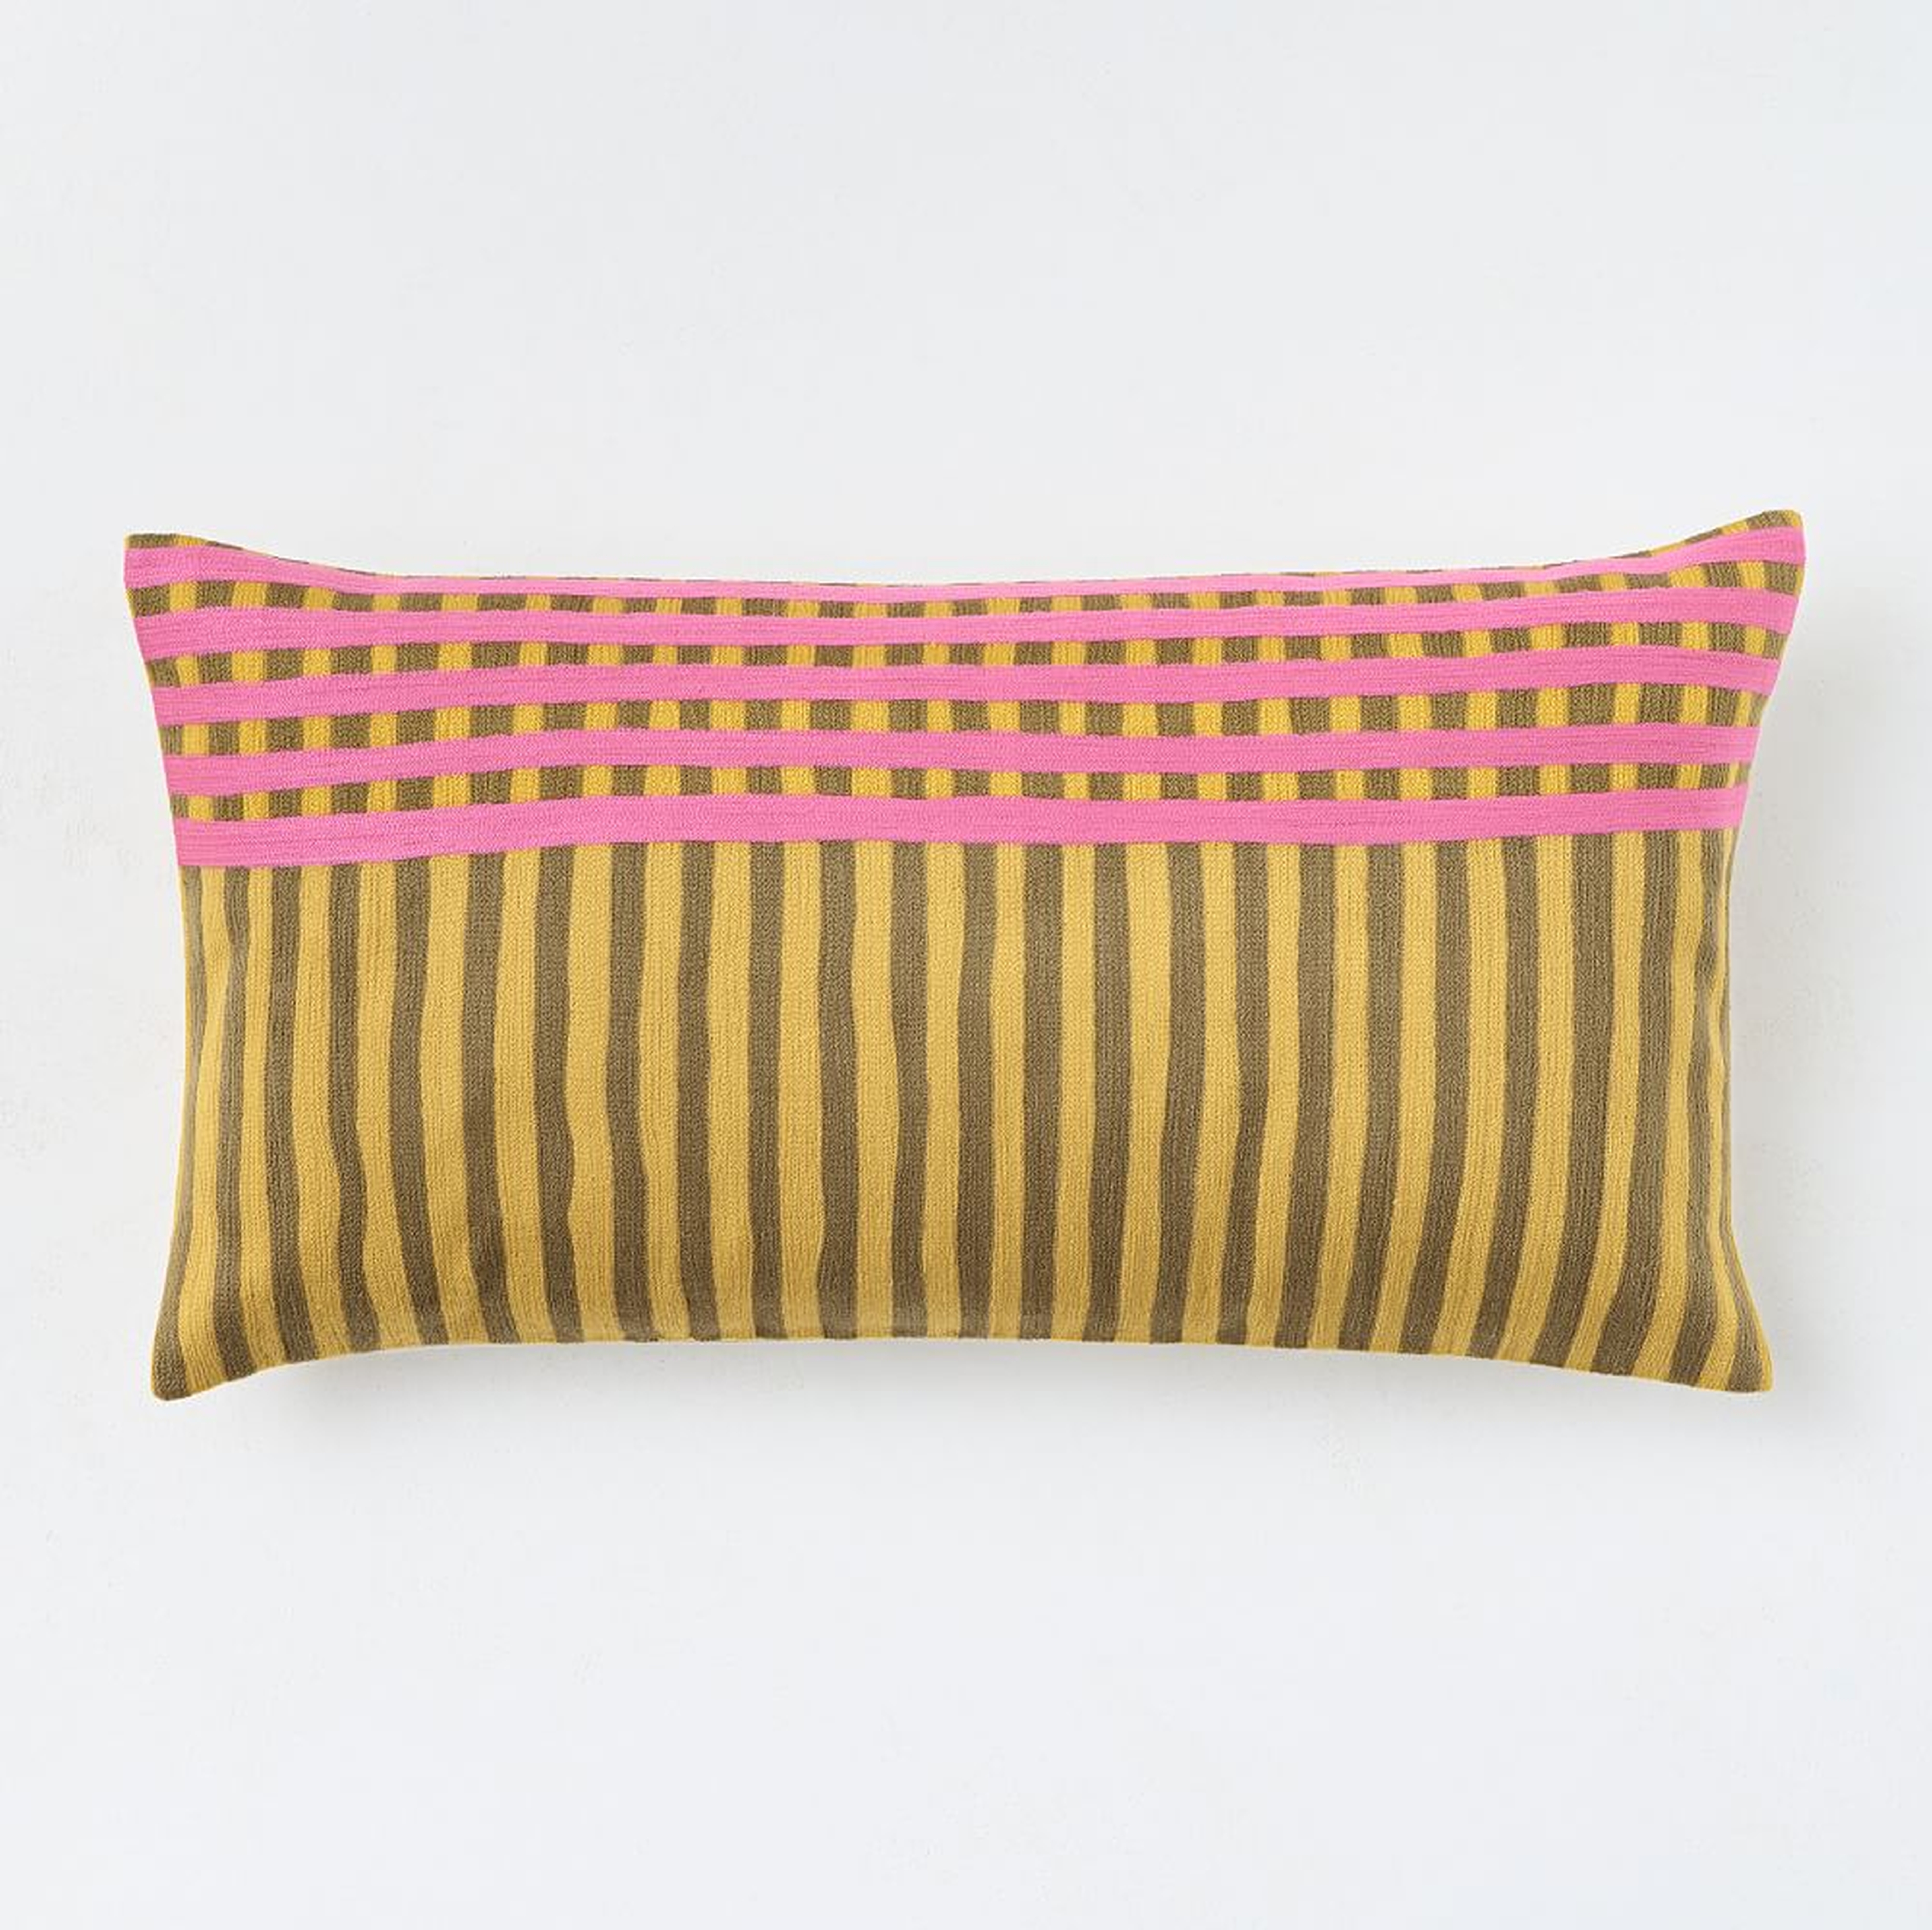 Modern Grid Pillow Cover, Dark Horseradish, 14"x26" - West Elm